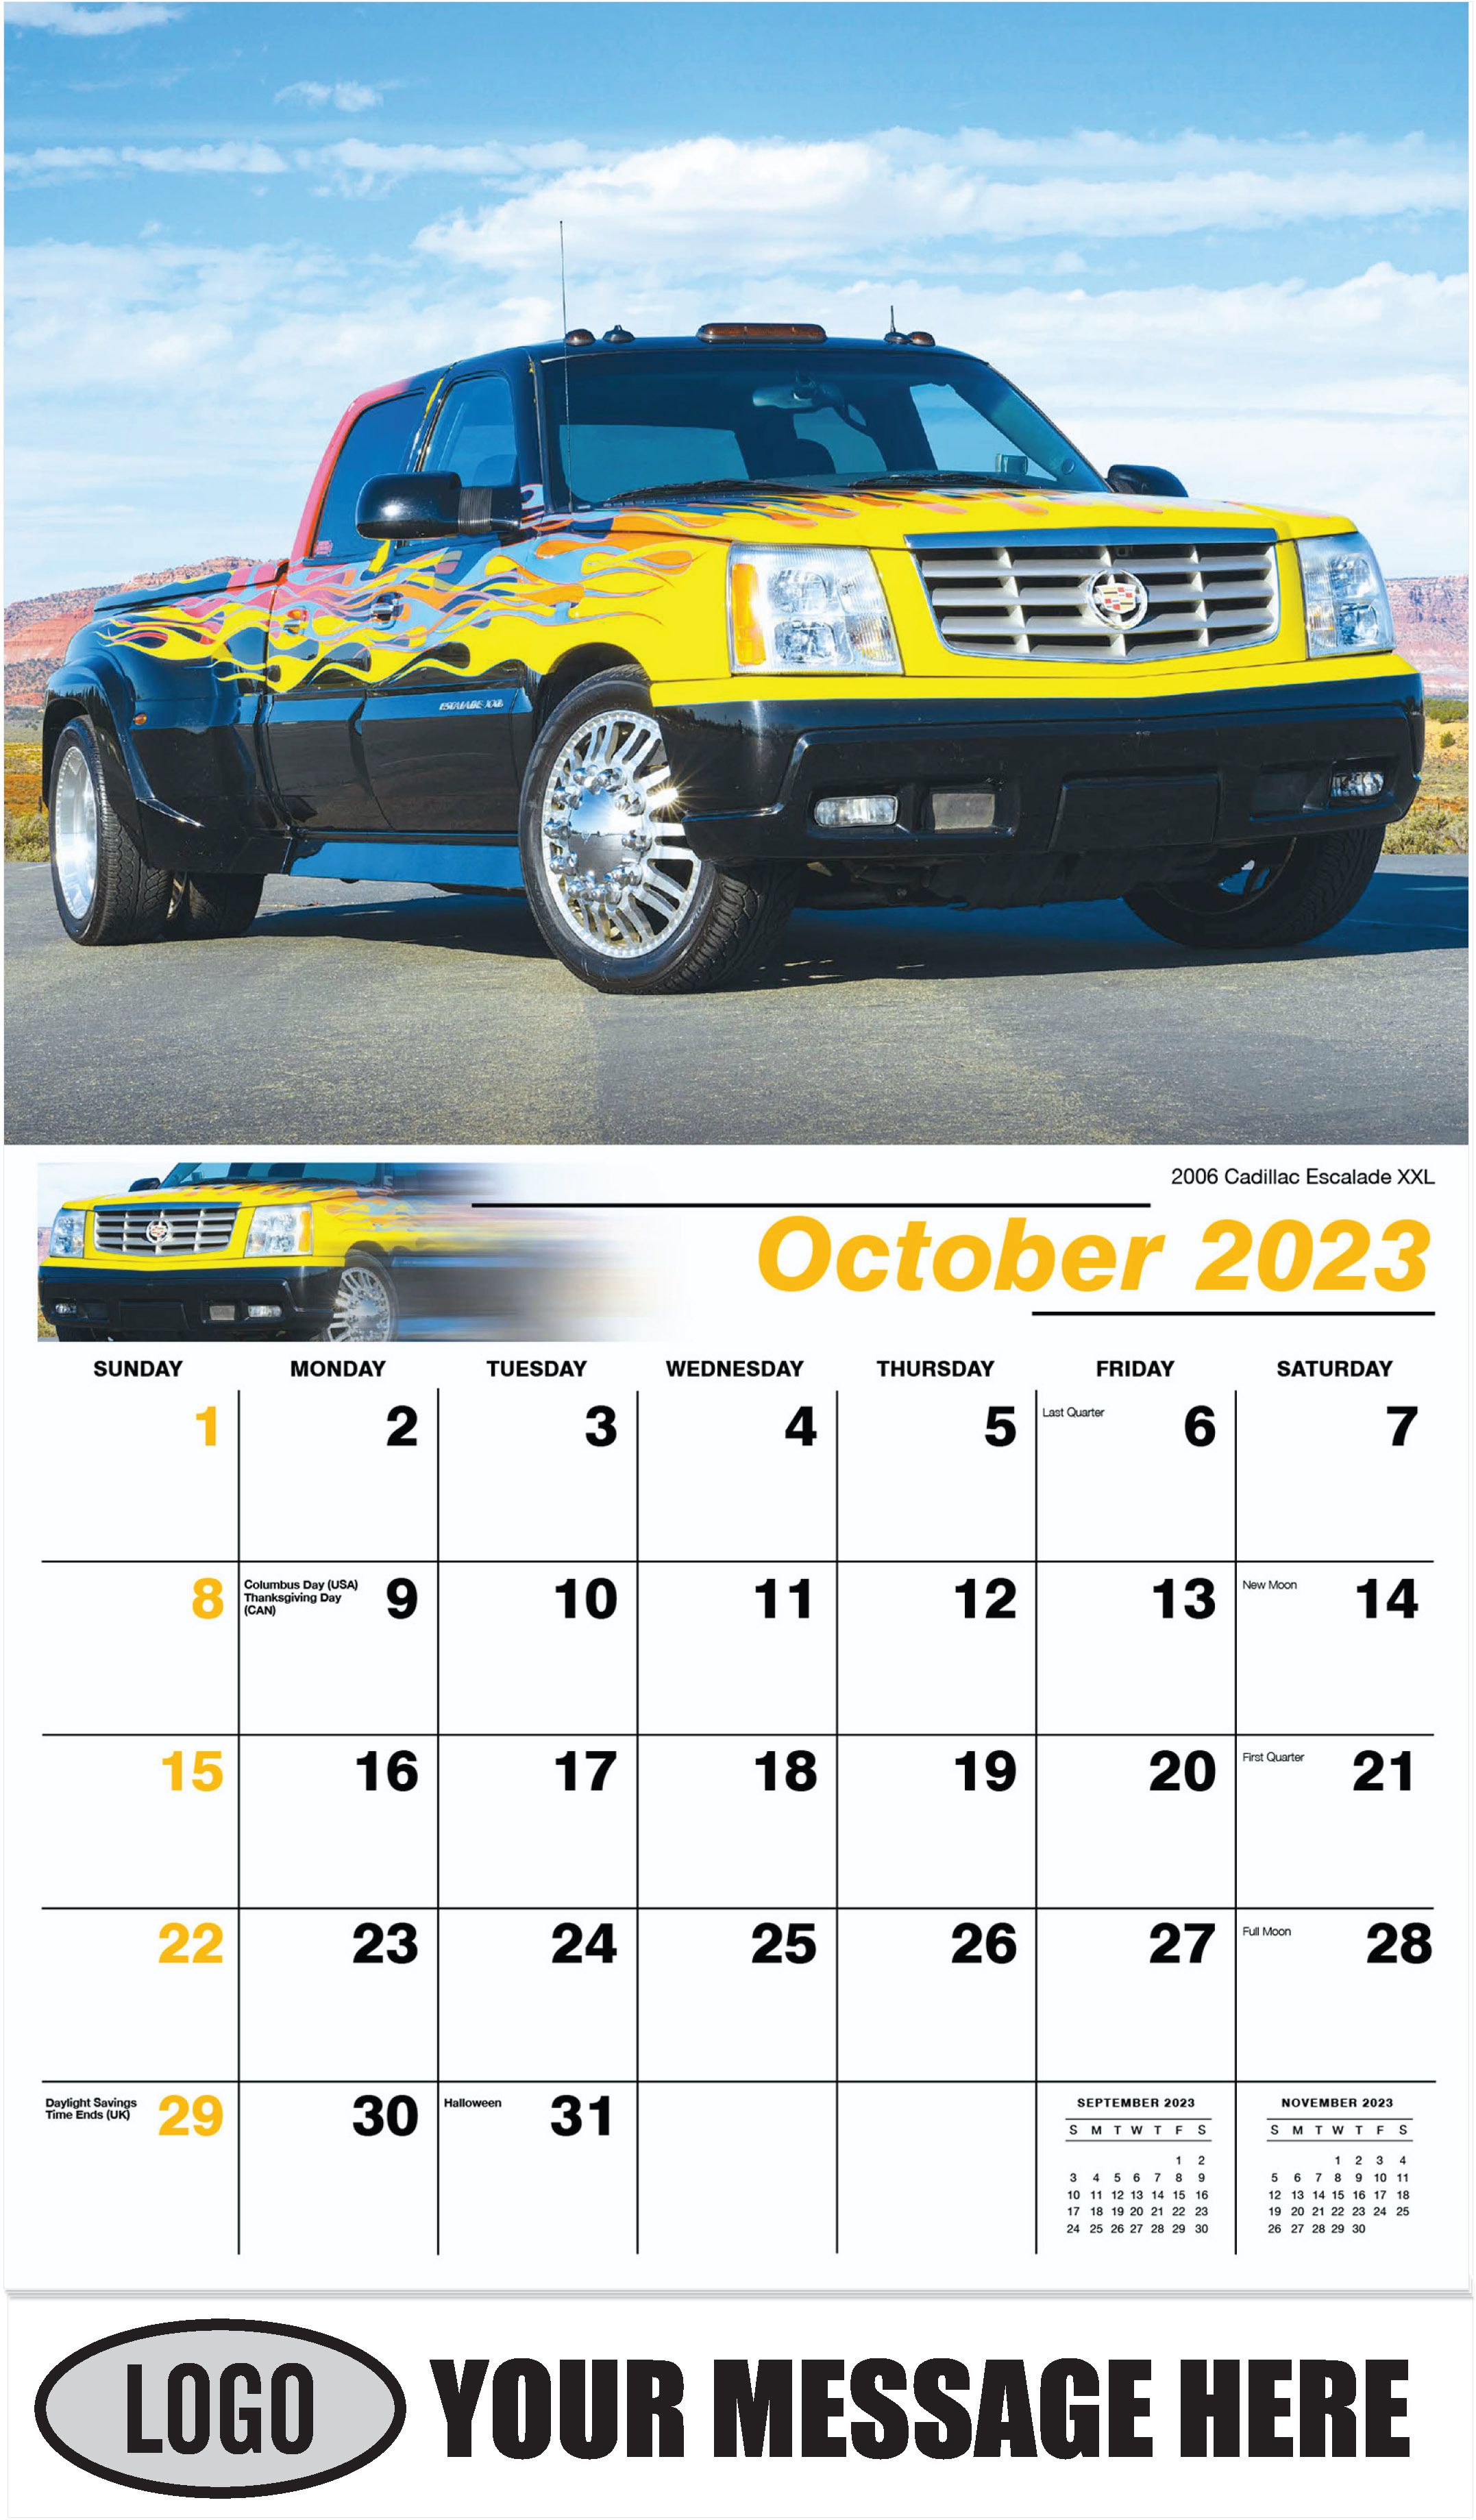 2006 Cadillac Escalade XXL - October - Pumped Up Pickups 2023 Promotional Calendar